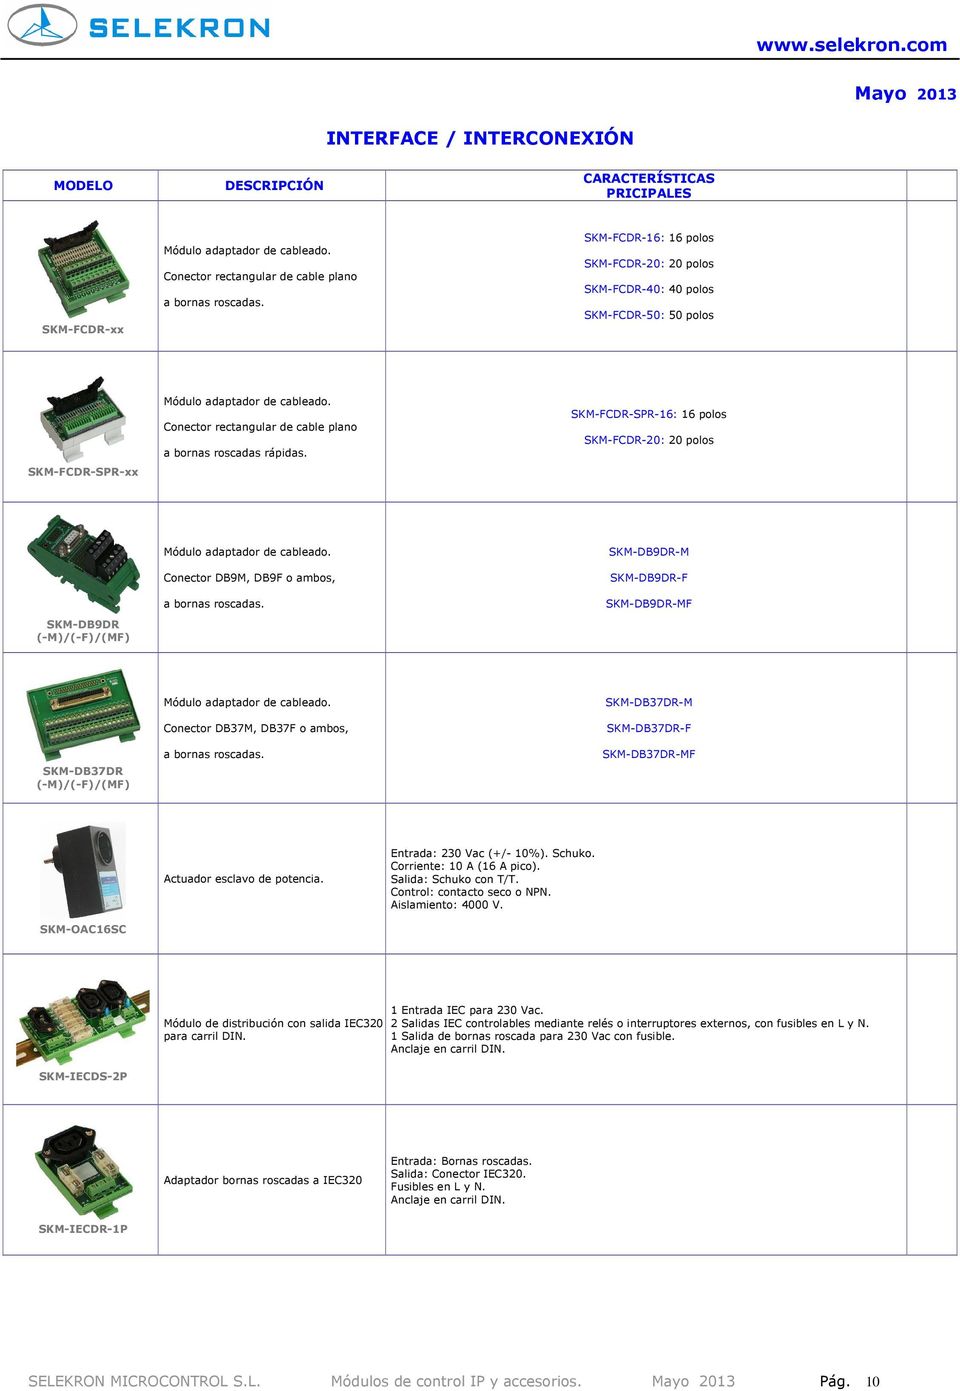 SKM-FCDR-SPR-16: 16 polos SKM-FCDR-20: 20 polos SKM-DB9DR (-M)/(-F)/(MF) Módulo adaptador de cableado. Conector DB9M, DB9F o ambos, a bornas roscadas.